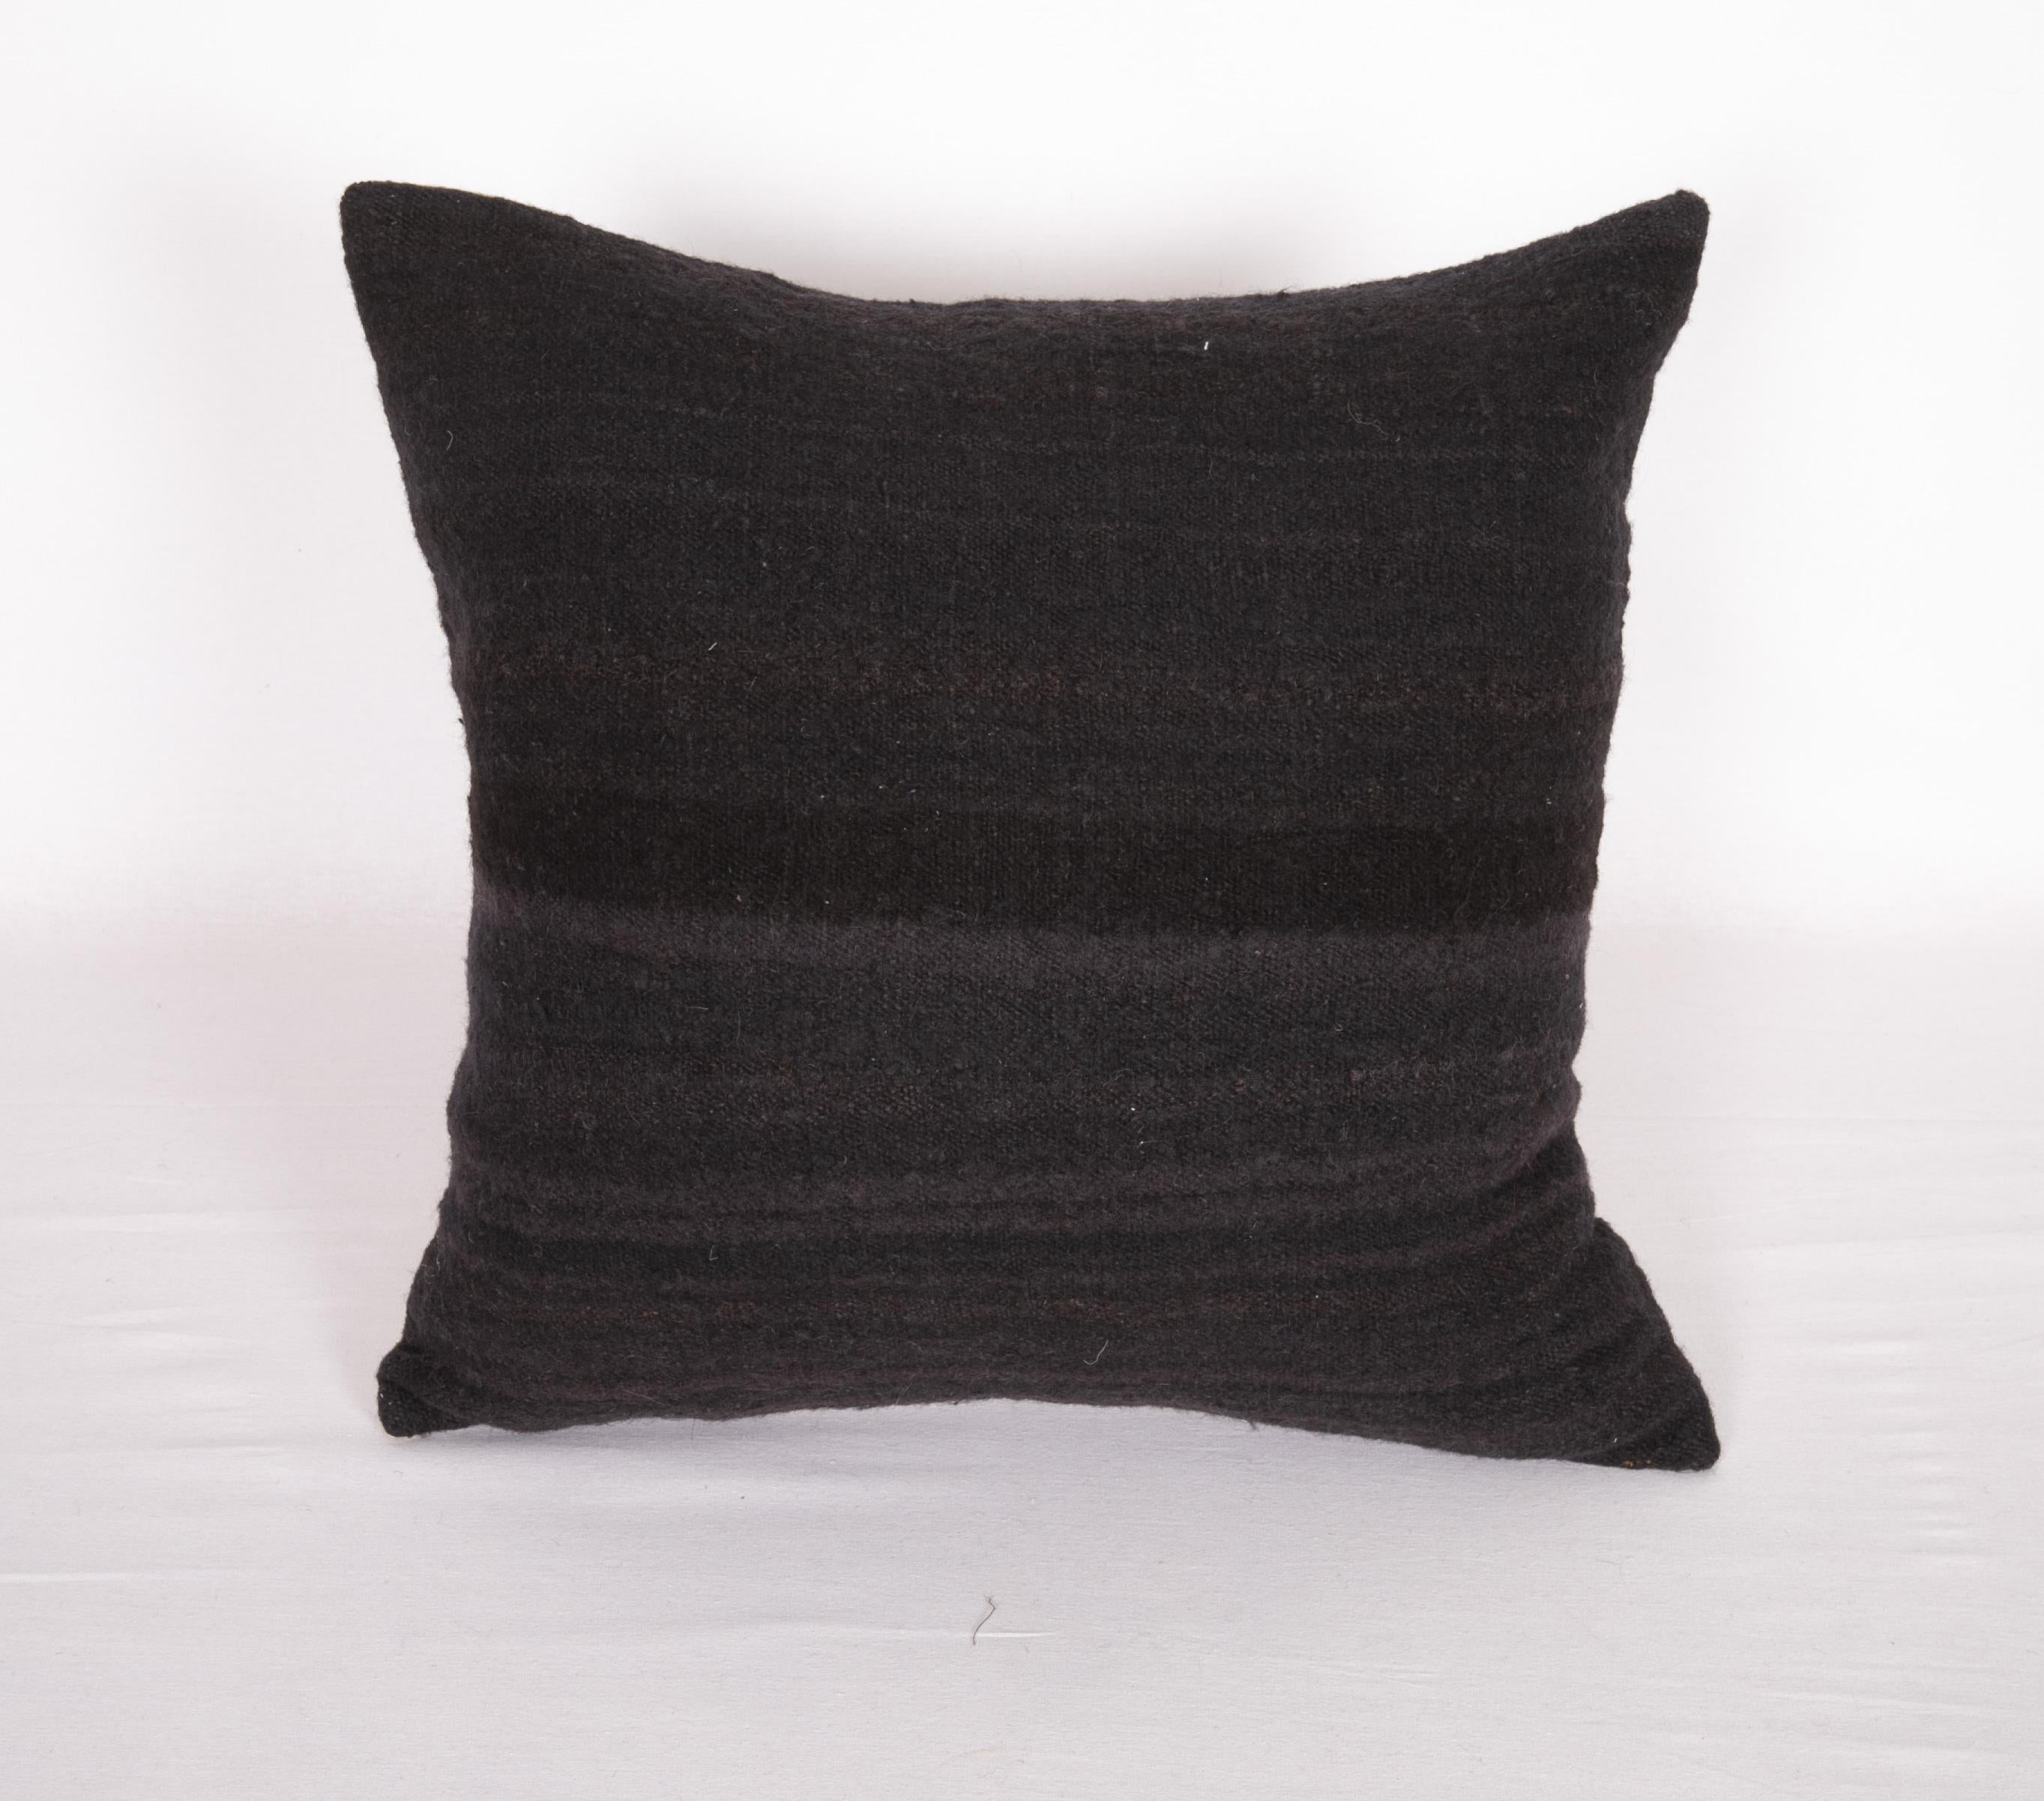 Hand-Woven Black Pillow Covers made from a Mıd 20th C. Turkısh Kilim